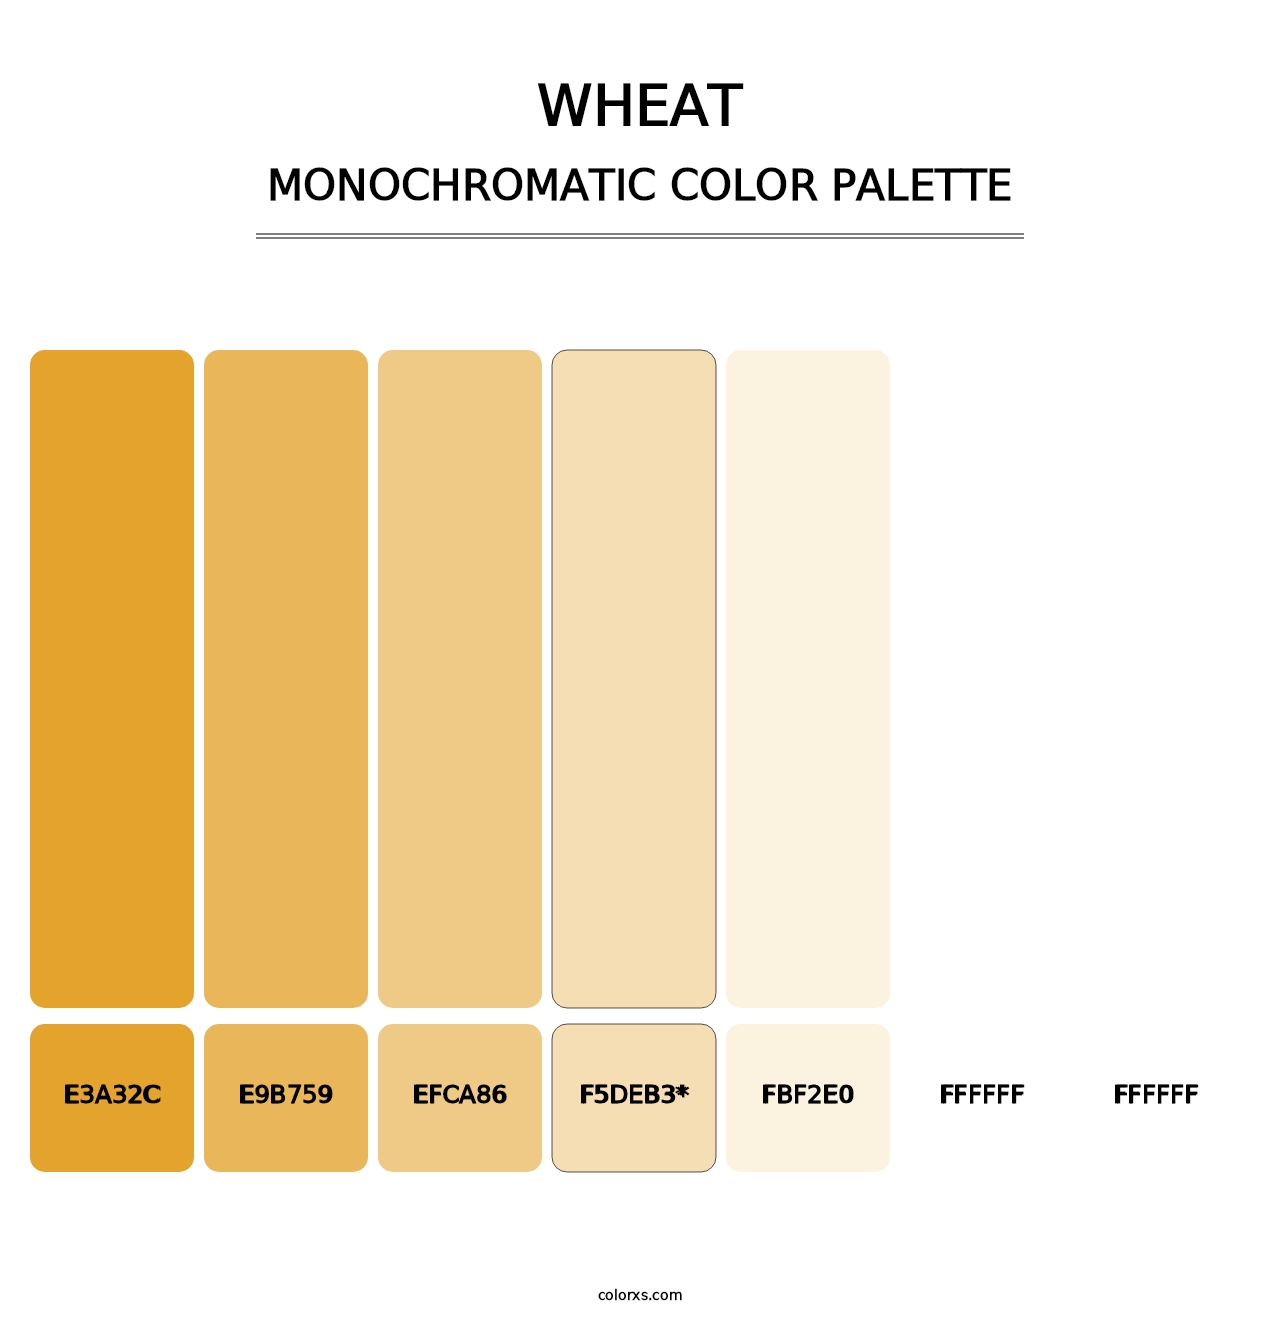 Wheat - Monochromatic Color Palette